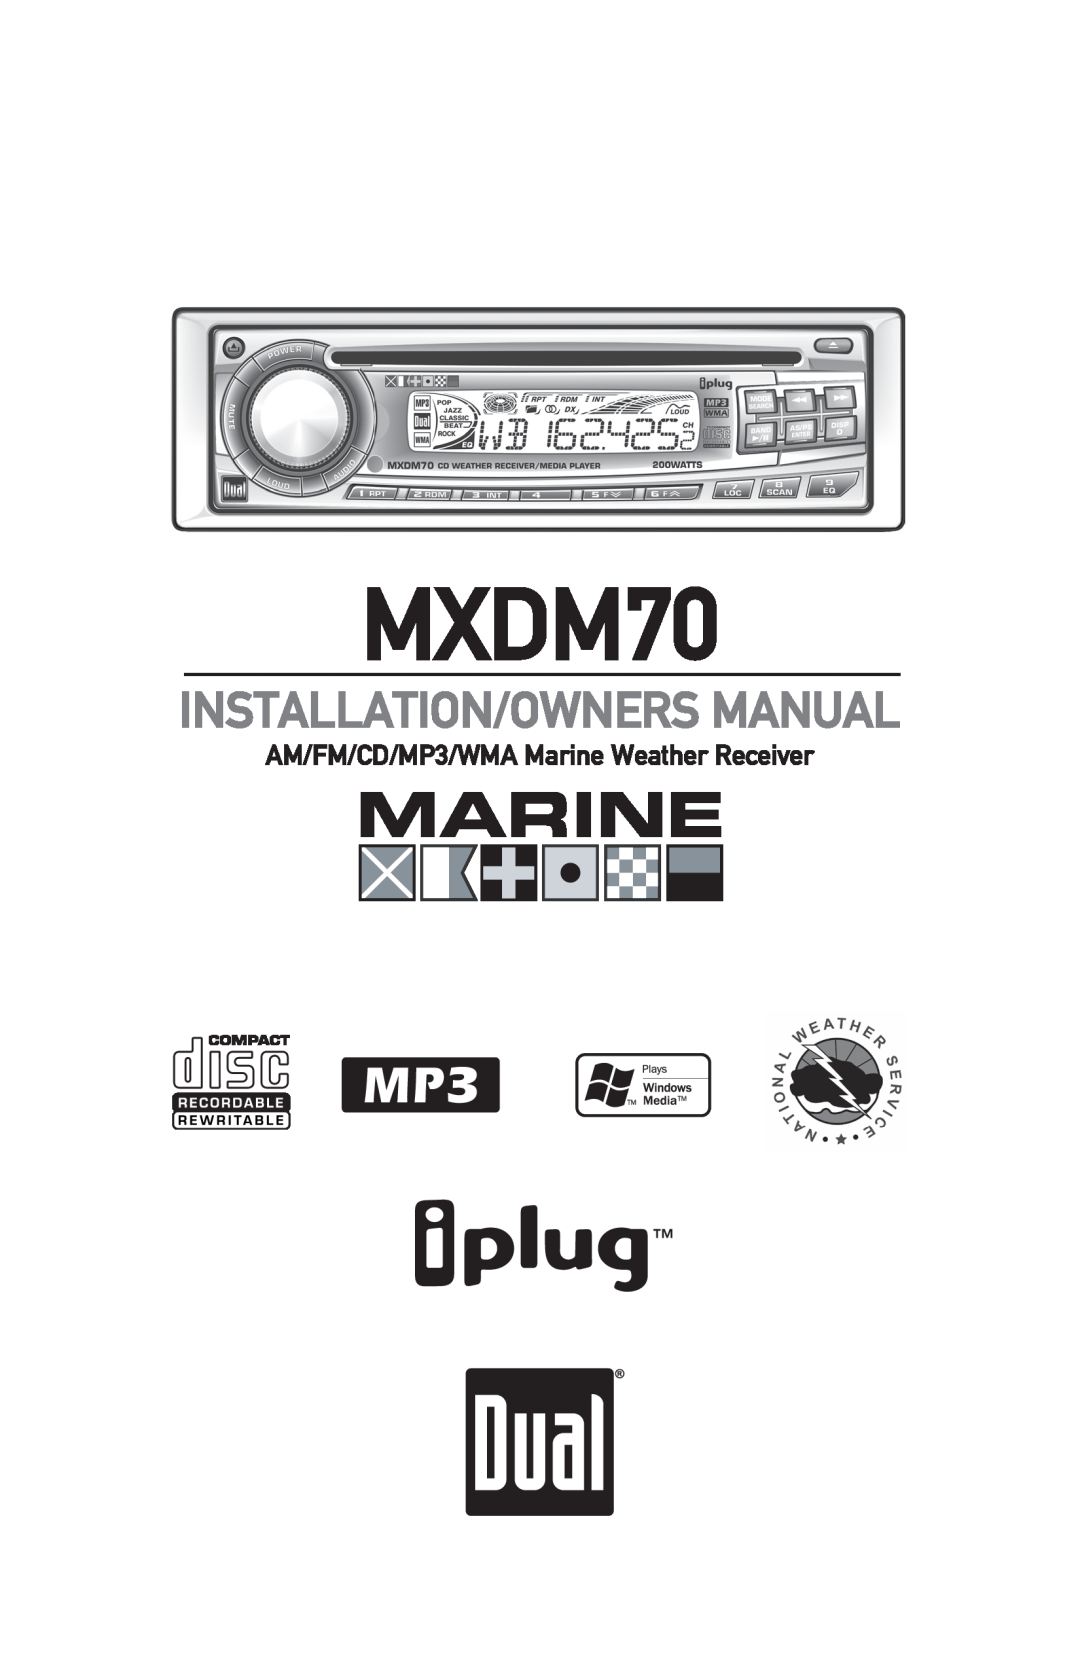 Dual MXDM70 owner manual AM/FM/CD/MP3/WMA Marine Weather Receiver 